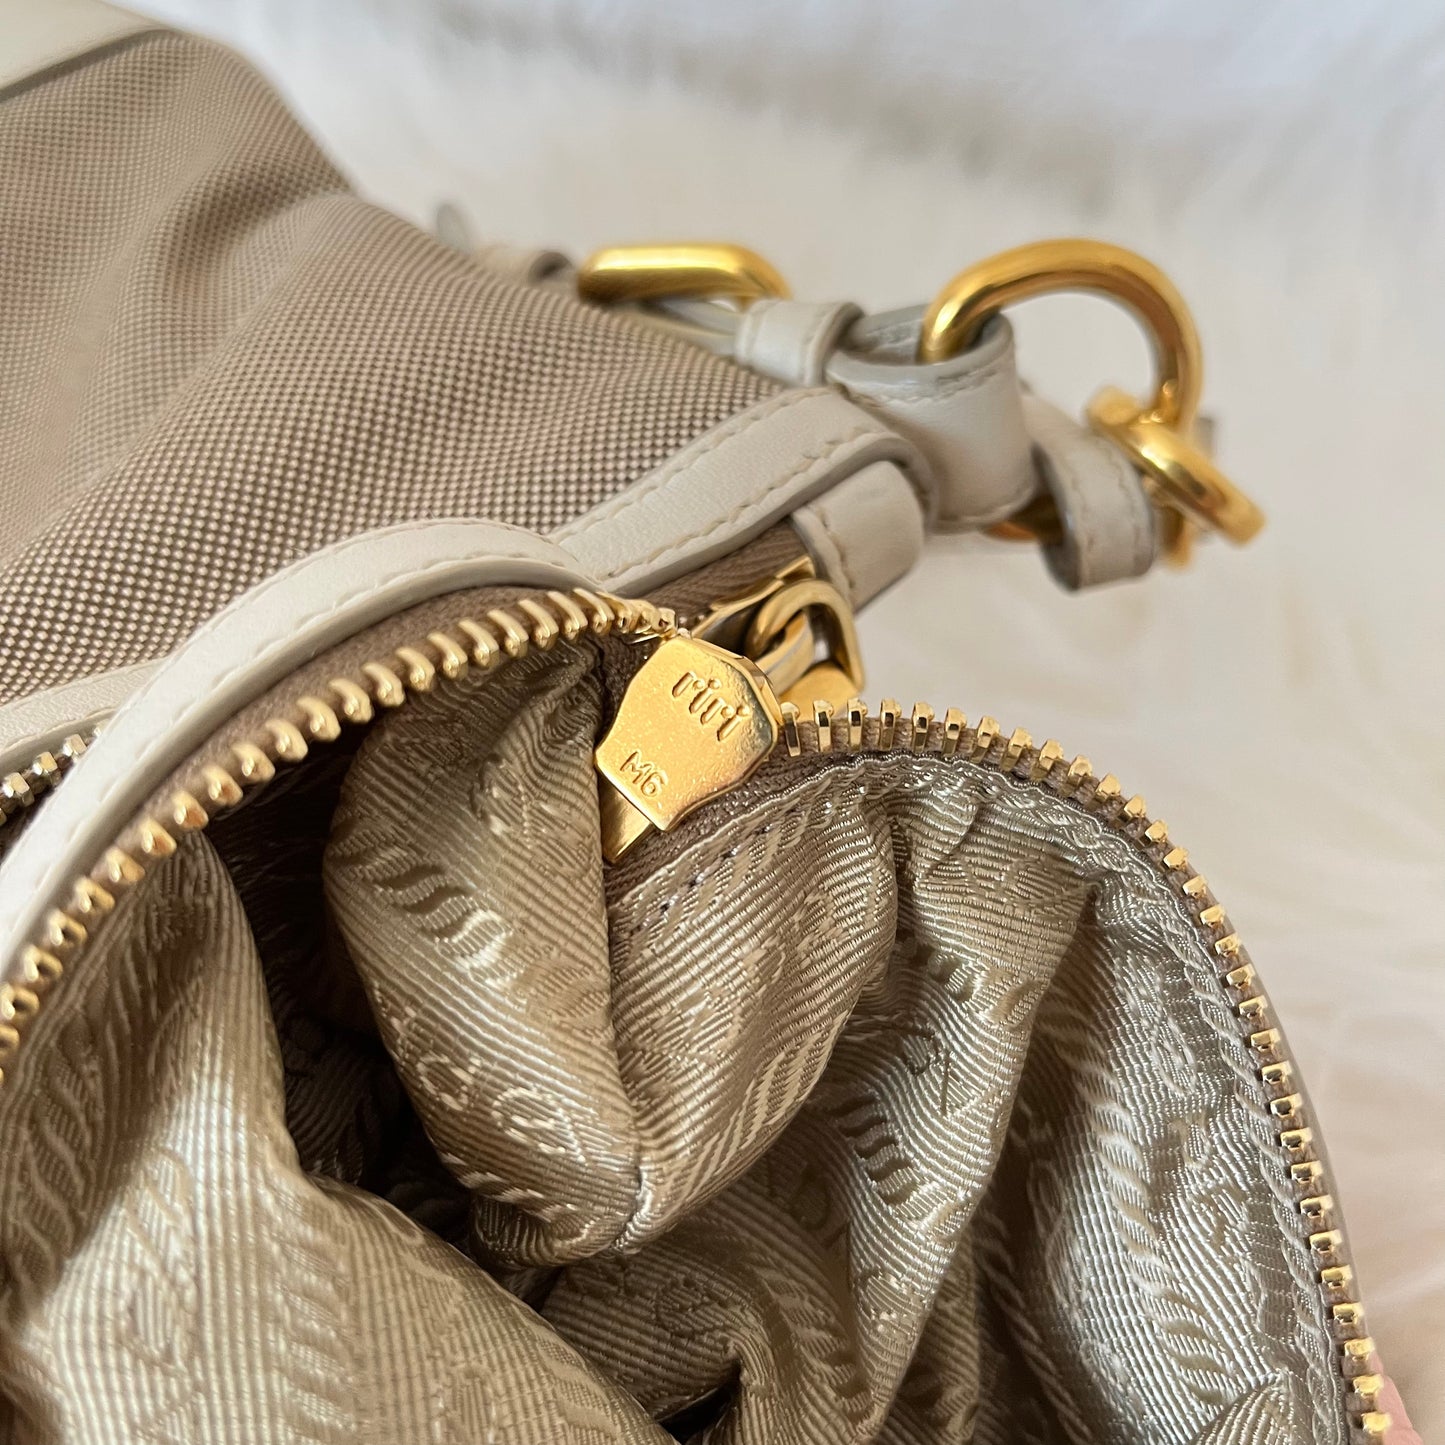 Prada Jacquard Canvas Leather Shoulder Bag